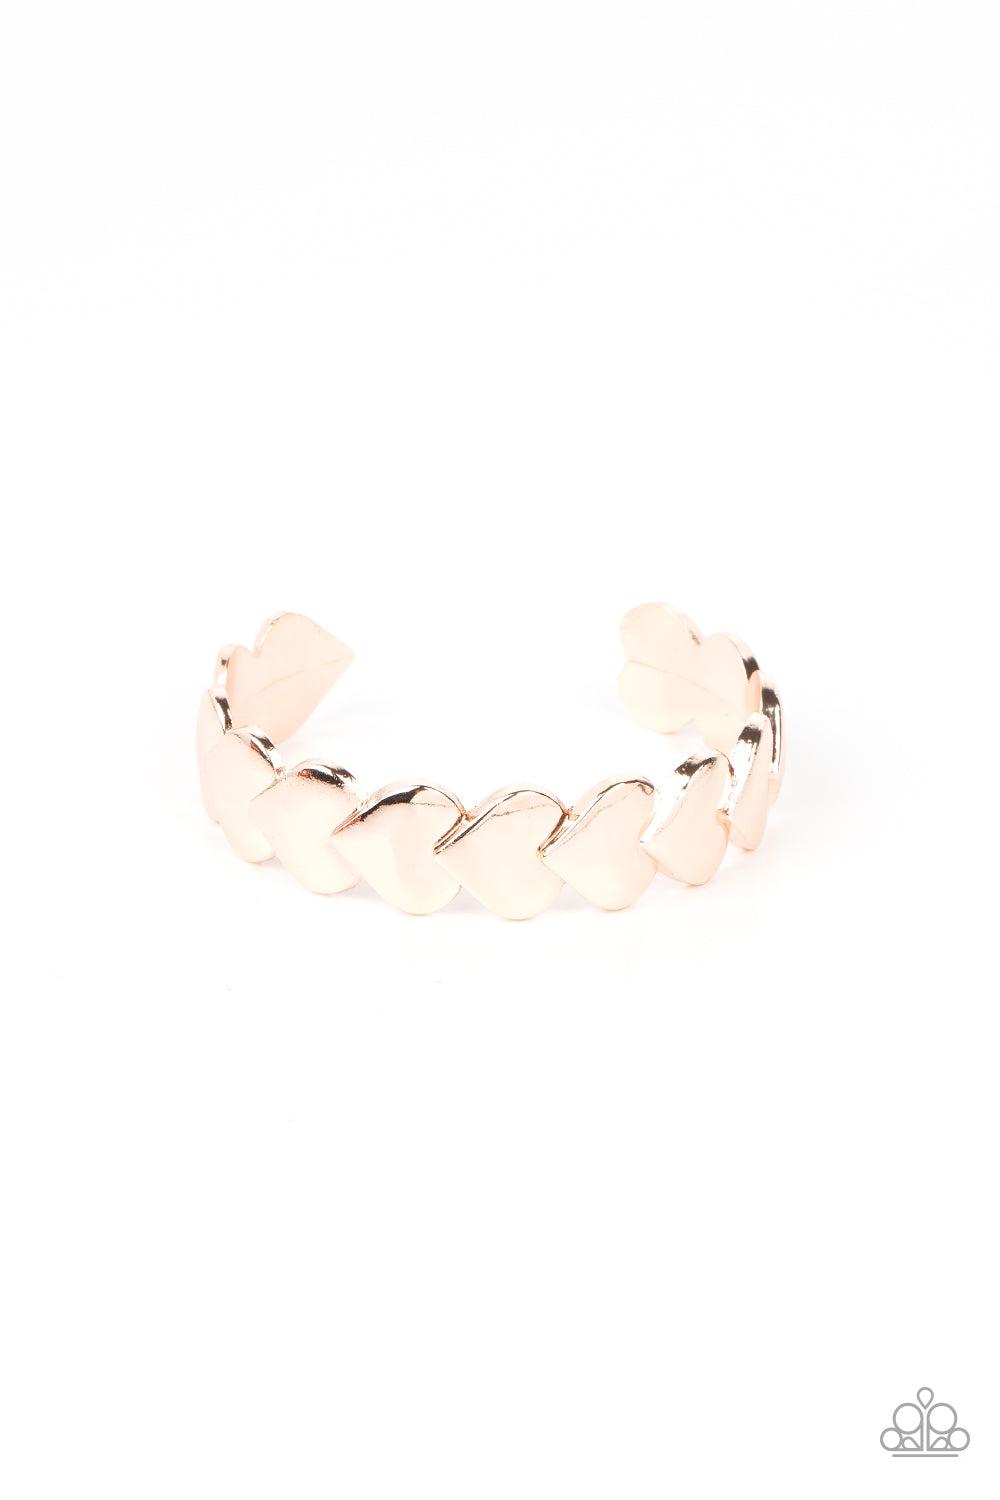 Hearts Galore Rose Gold Cuff Bracelet - Paparazzi Accessories- lightbox - CarasShop.com - $5 Jewelry by Cara Jewels